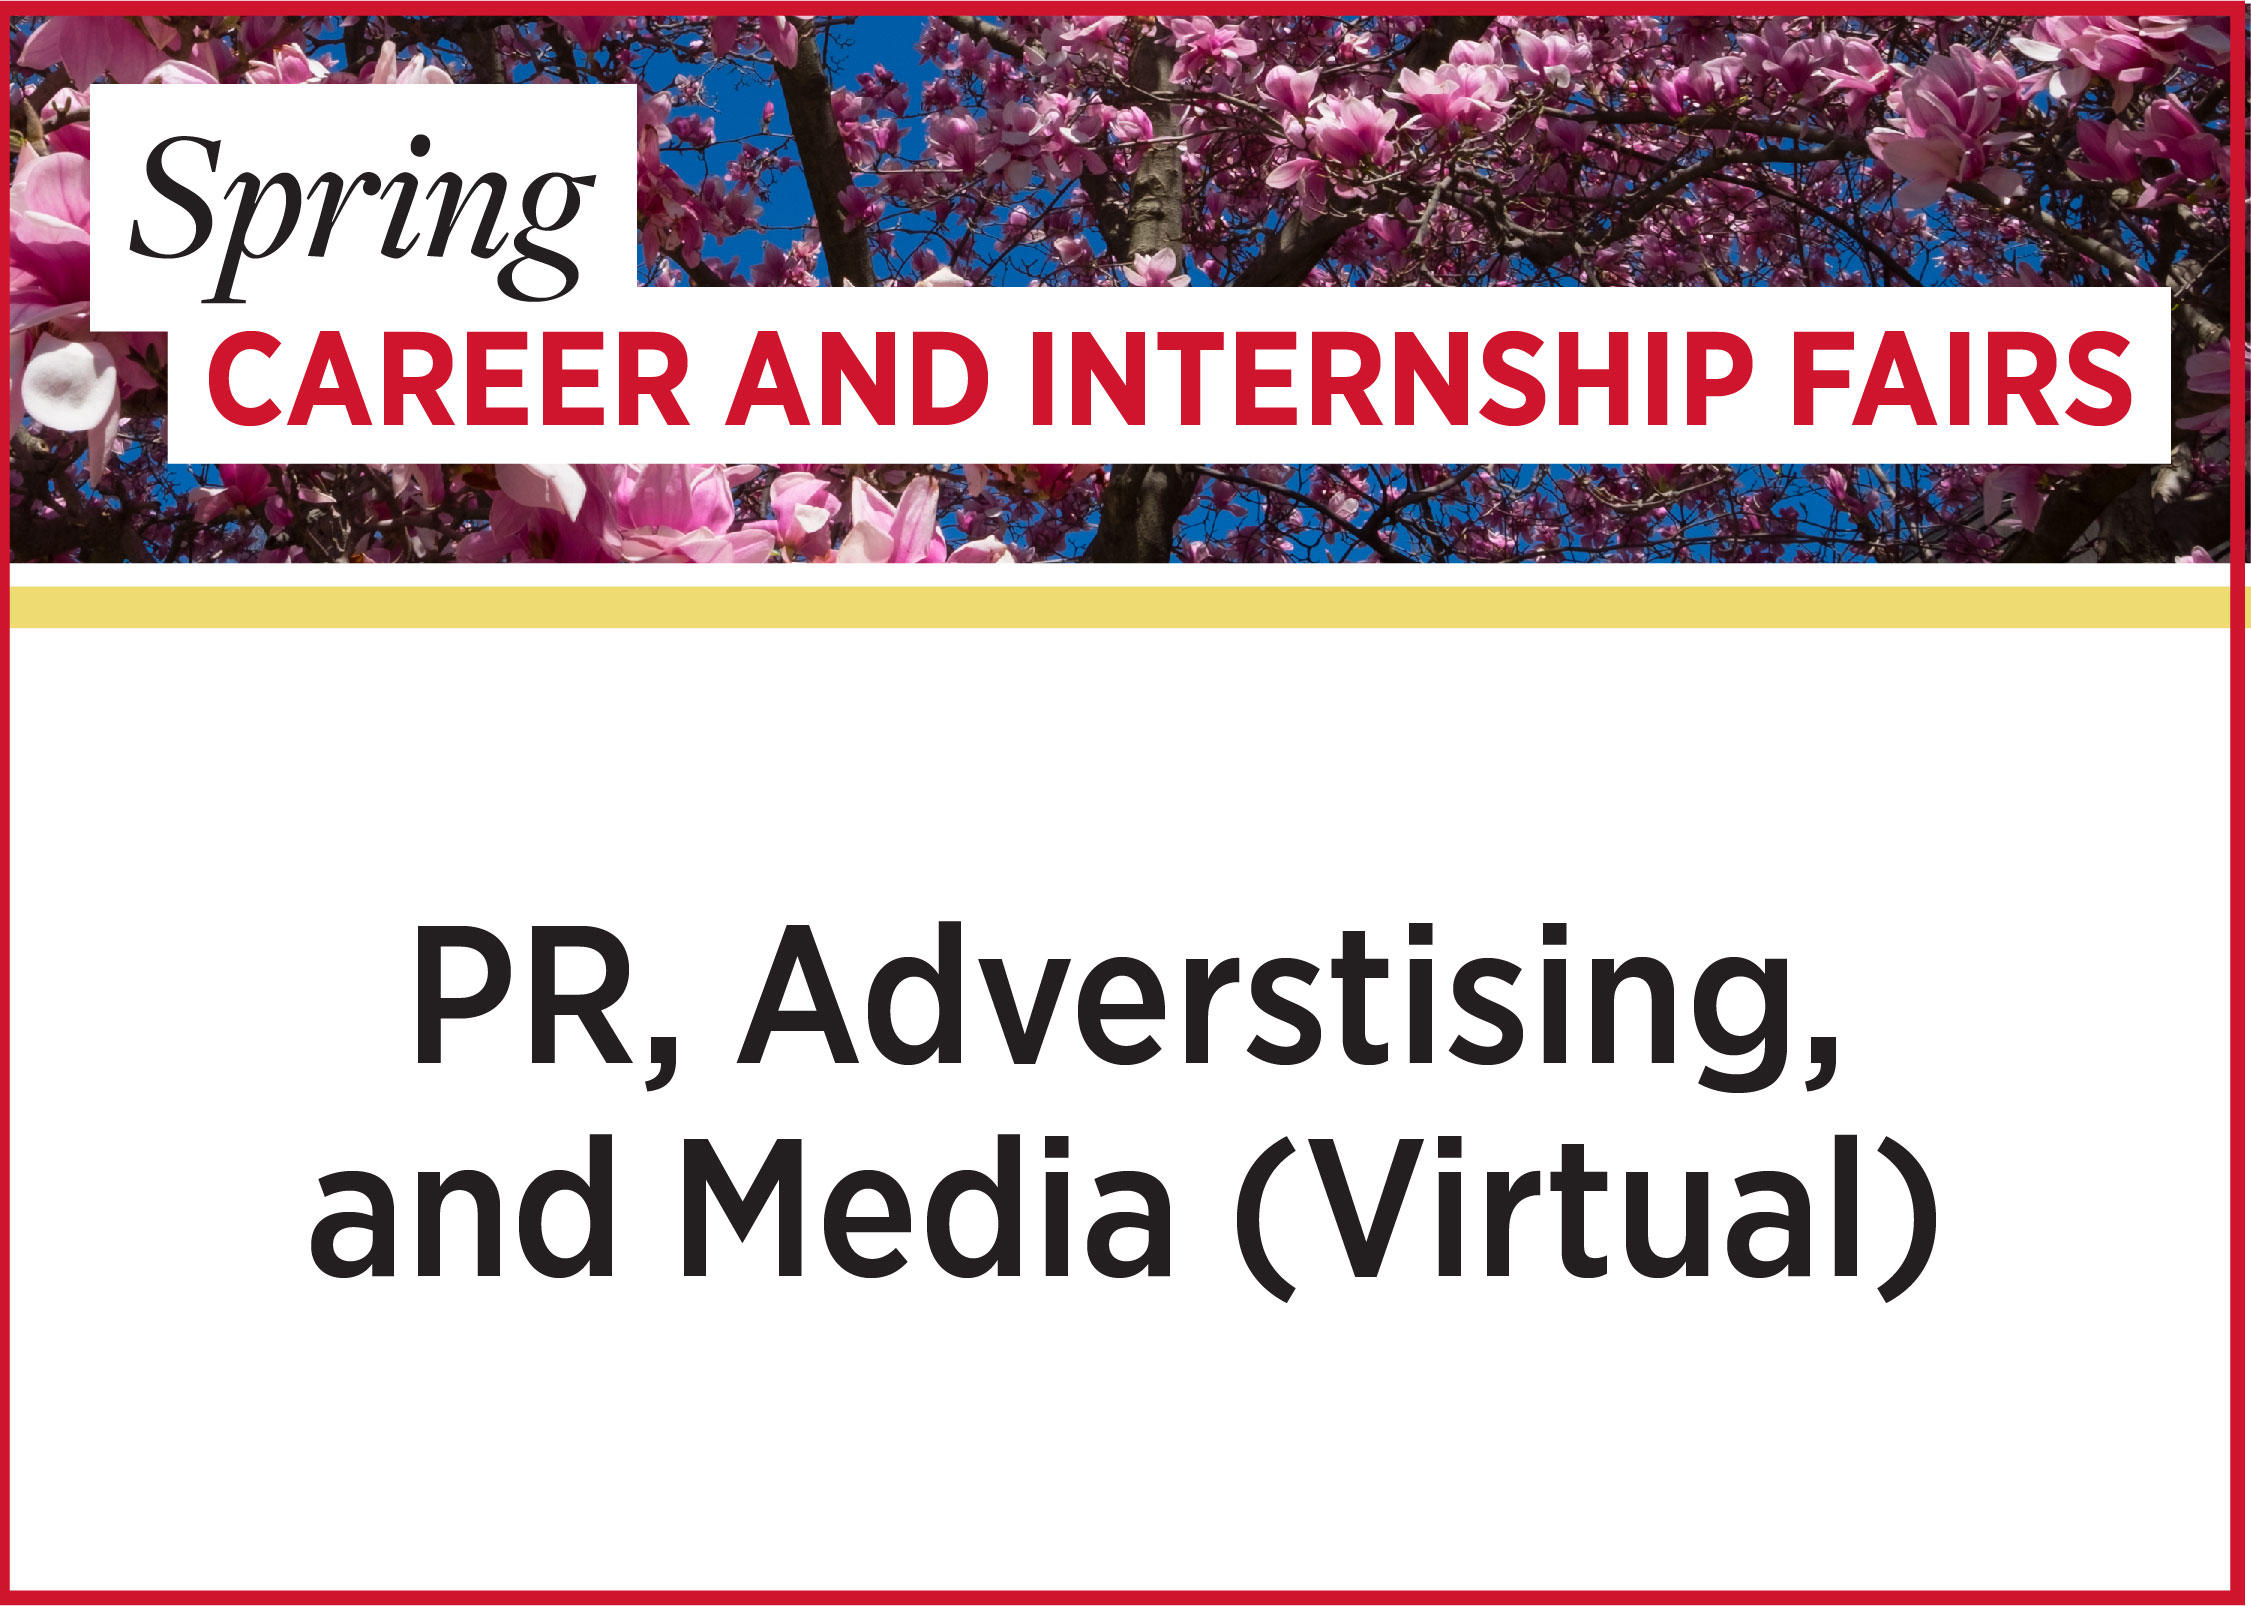 Spring Career and Internship Fairs - PR, Advertising, and Media